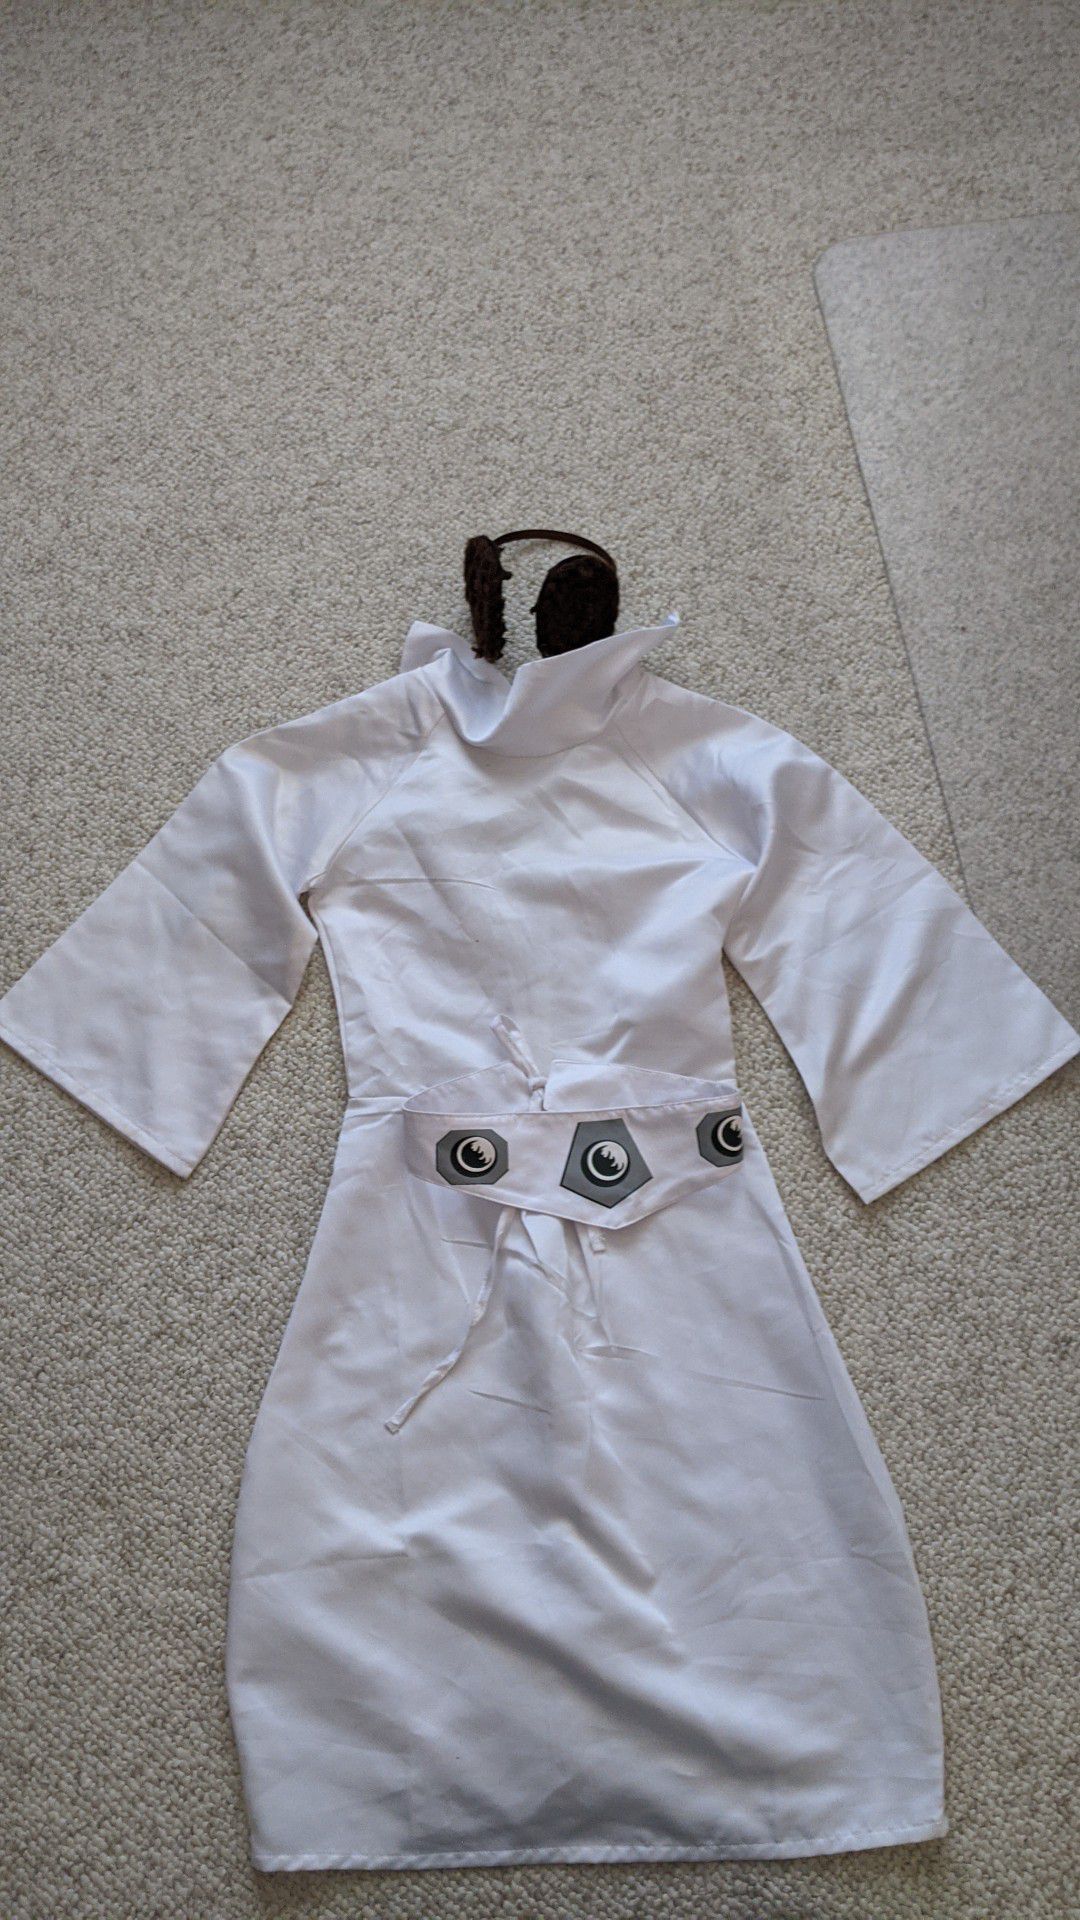 Girl's Princess Leia costume size 7-8